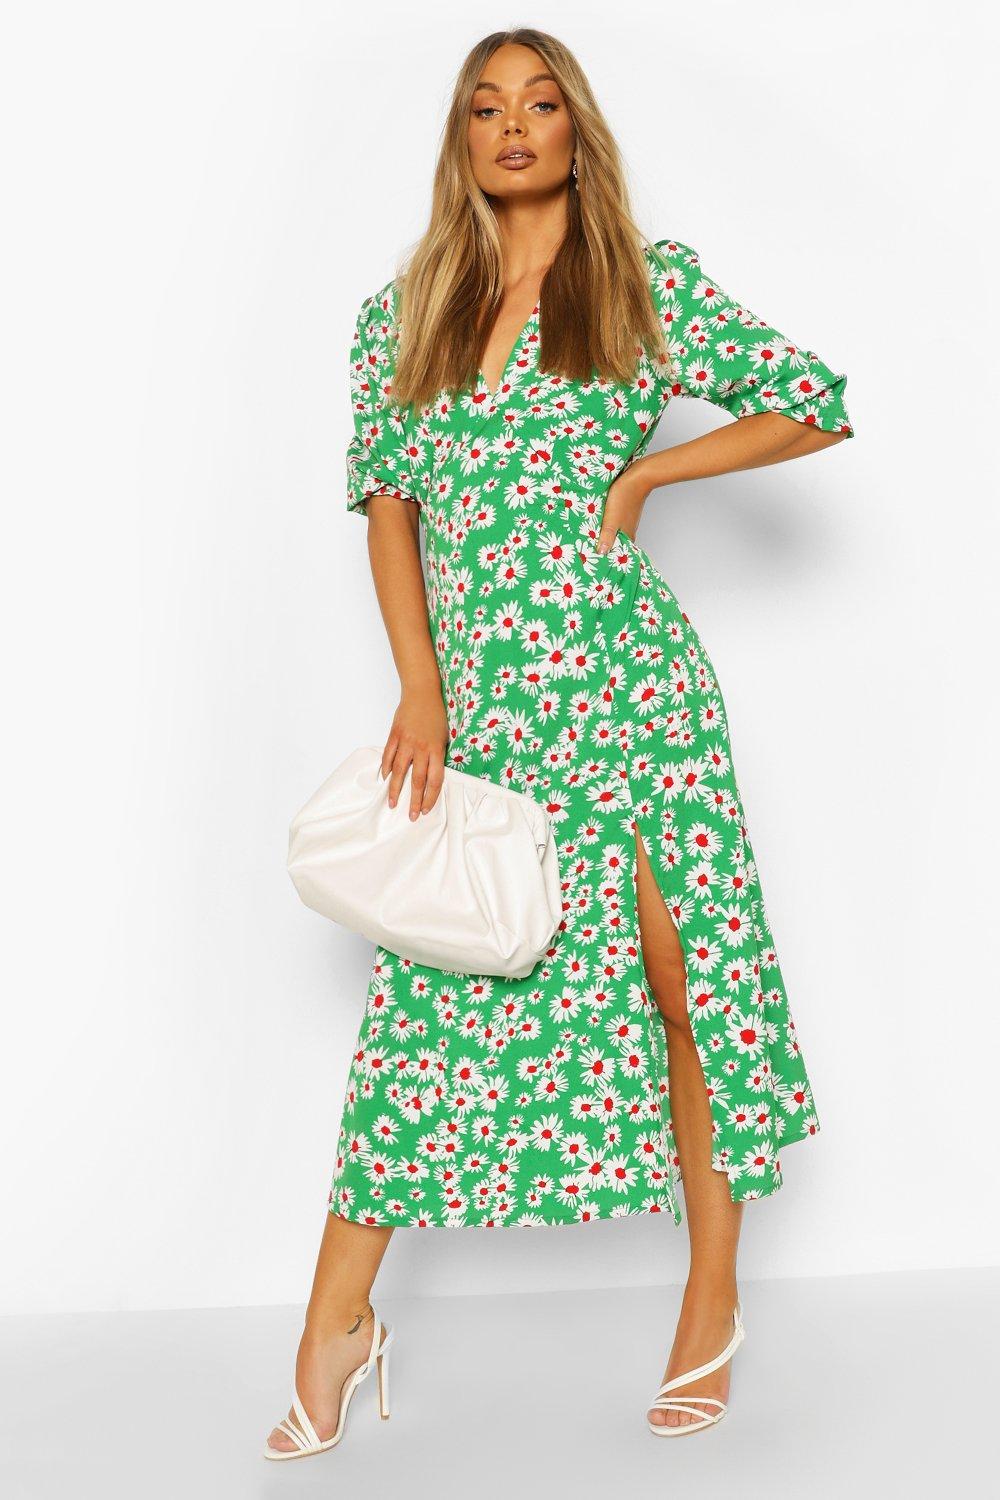 green daisy dress